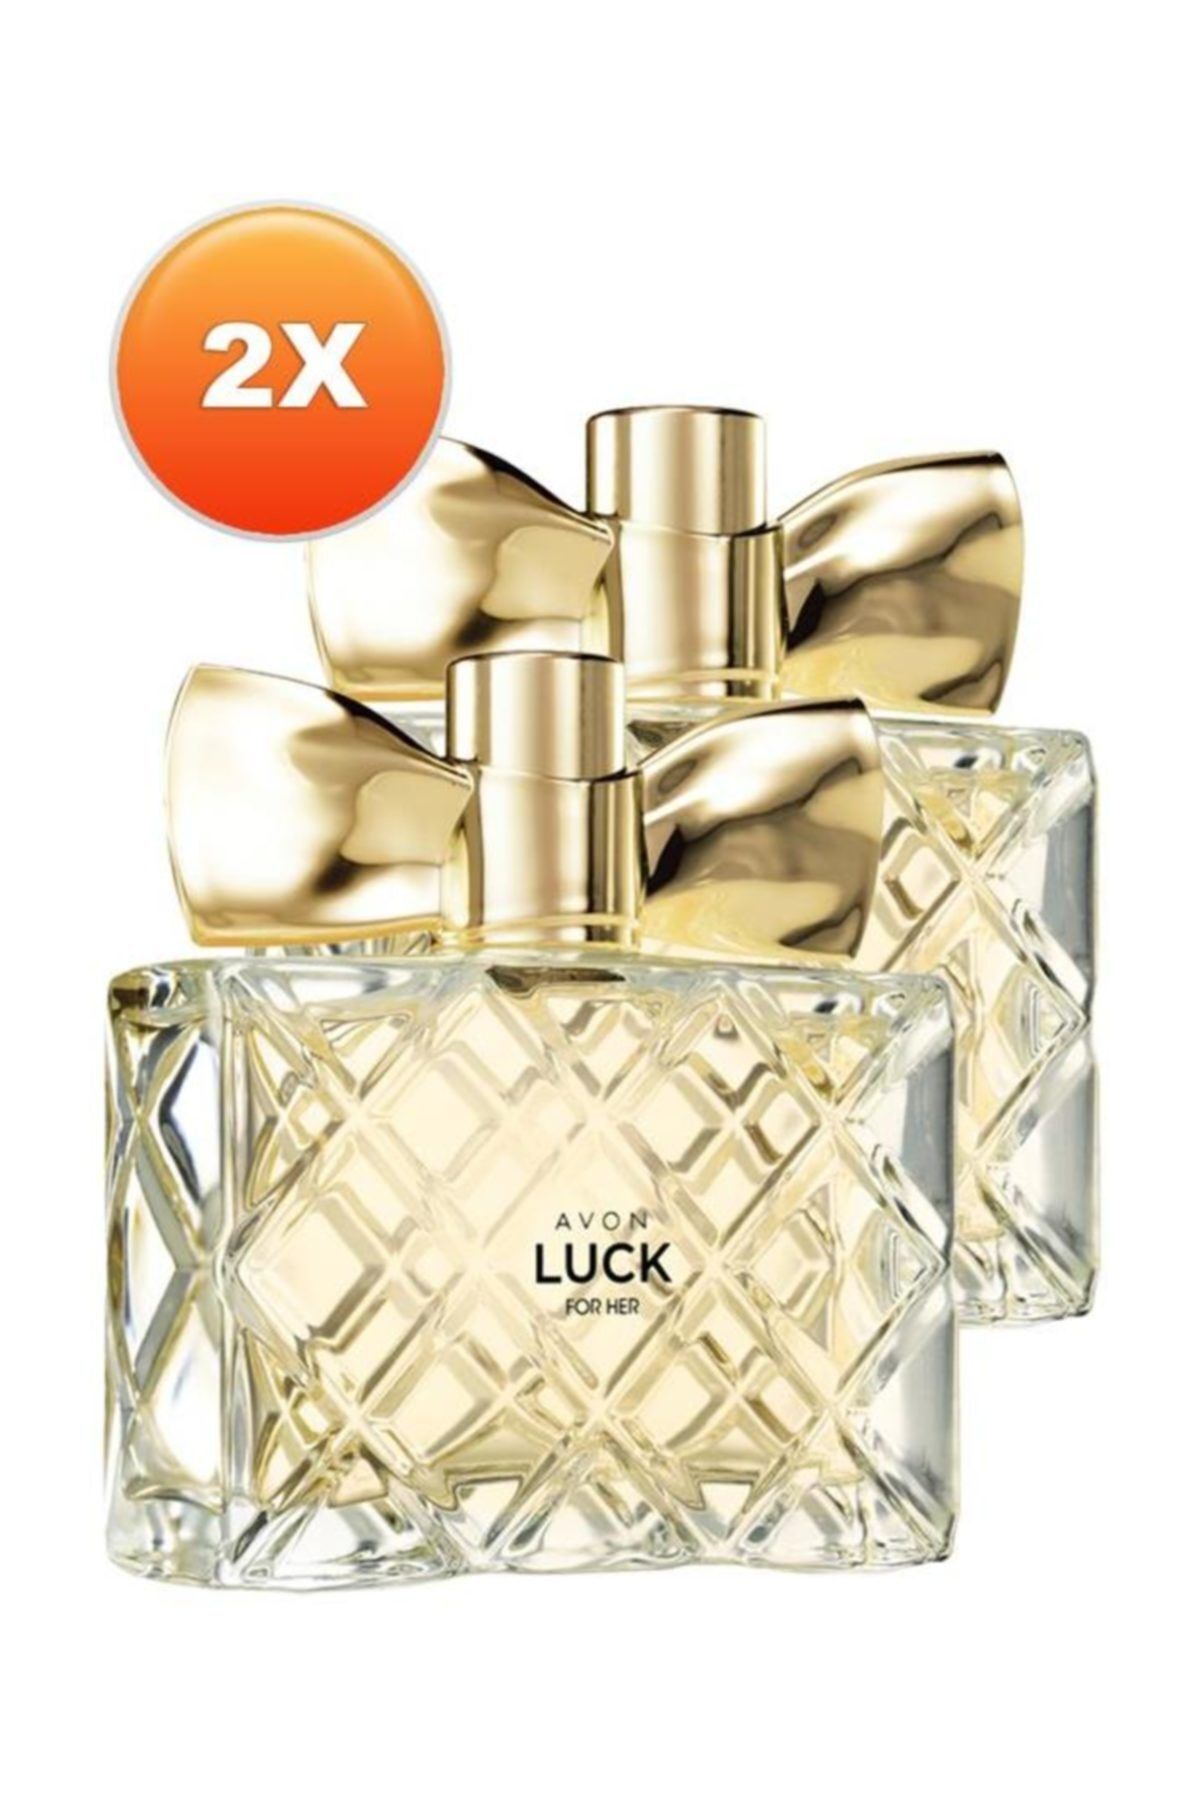 Avon Luck Kadın Parfüm Edp 50 Ml. İkili Set